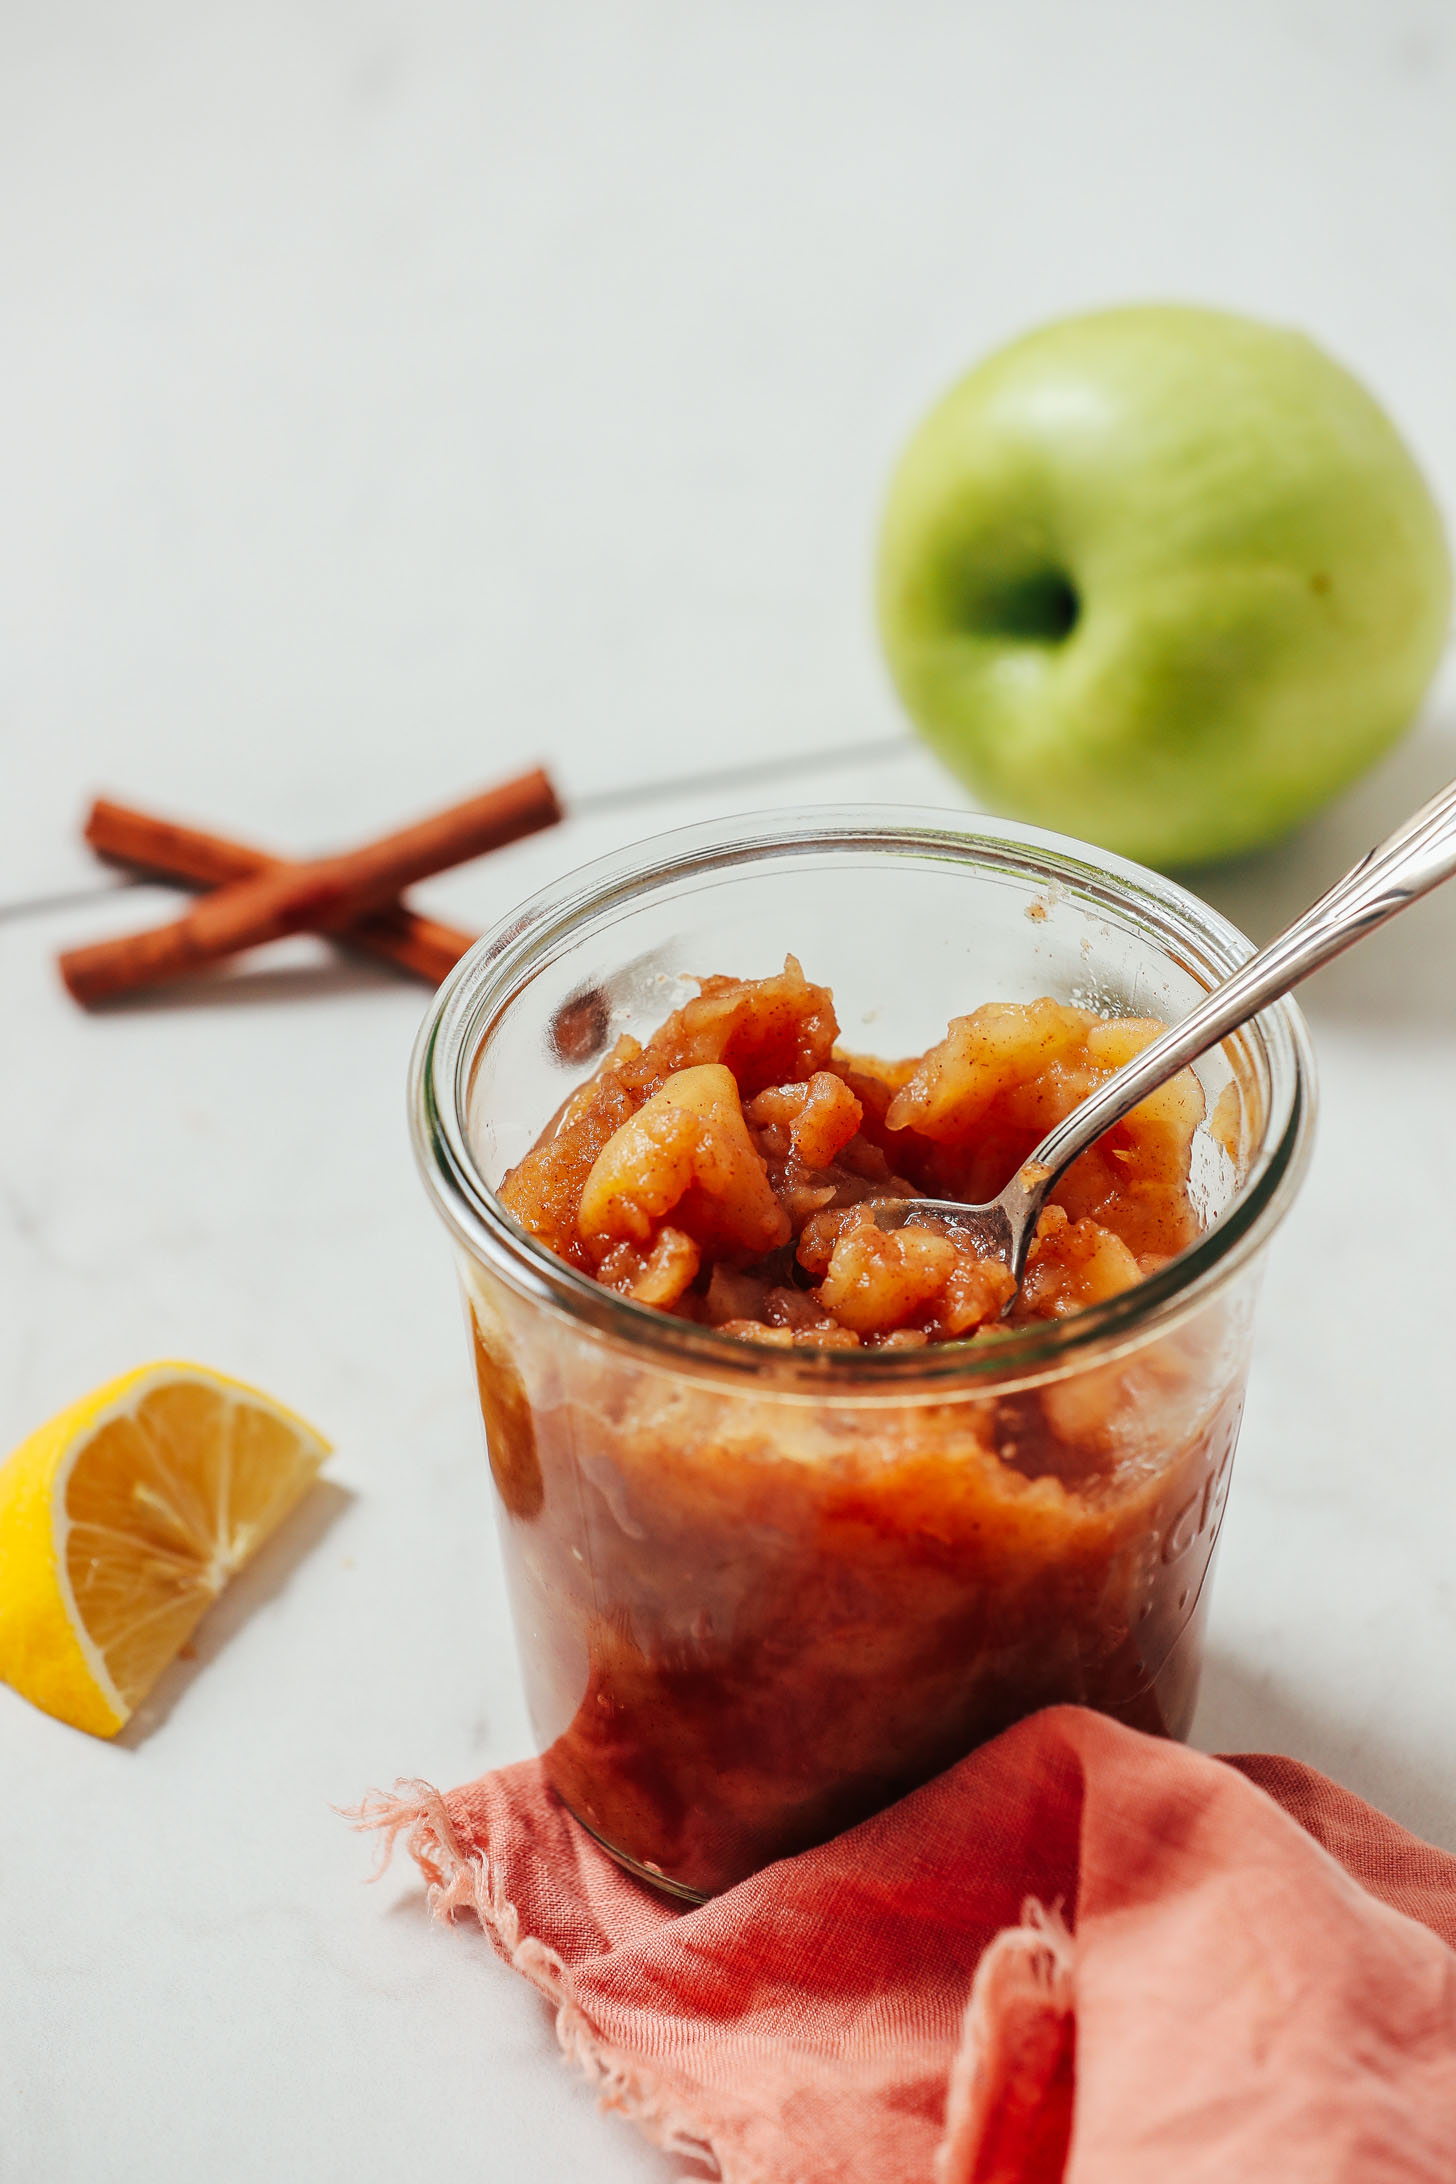 Spoon in a jar of homemade applesauce beside a lemon wedge, cinnamon sticks, and an apple